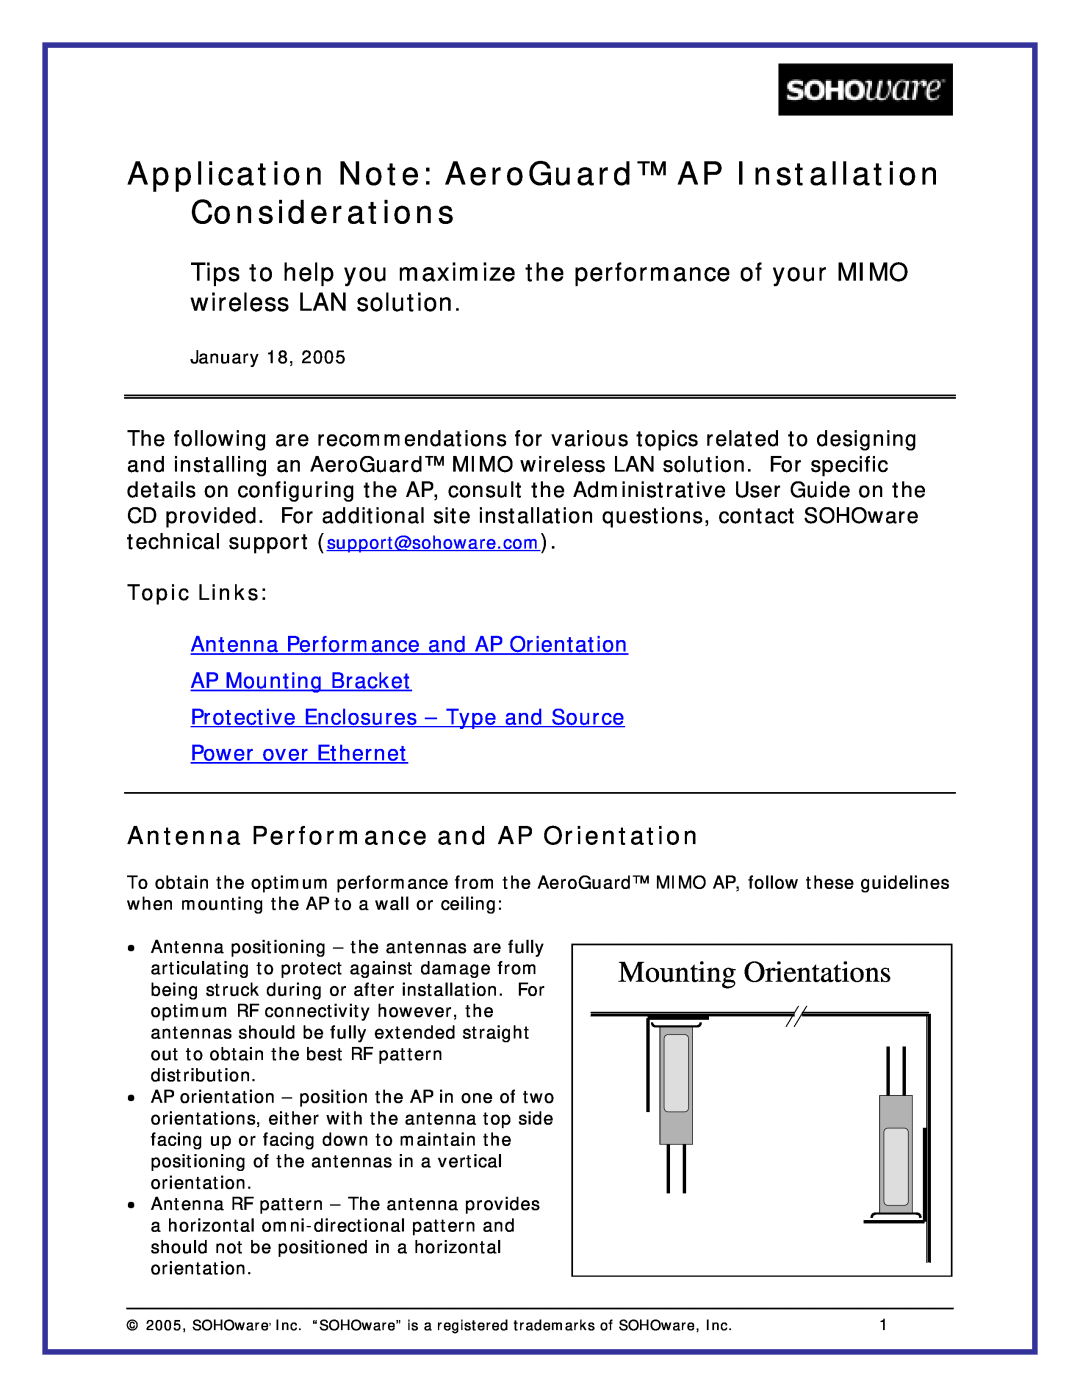 Soho manual Antenna Performance and AP Orientation, Application Note AeroGuard AP Installation Considerations 